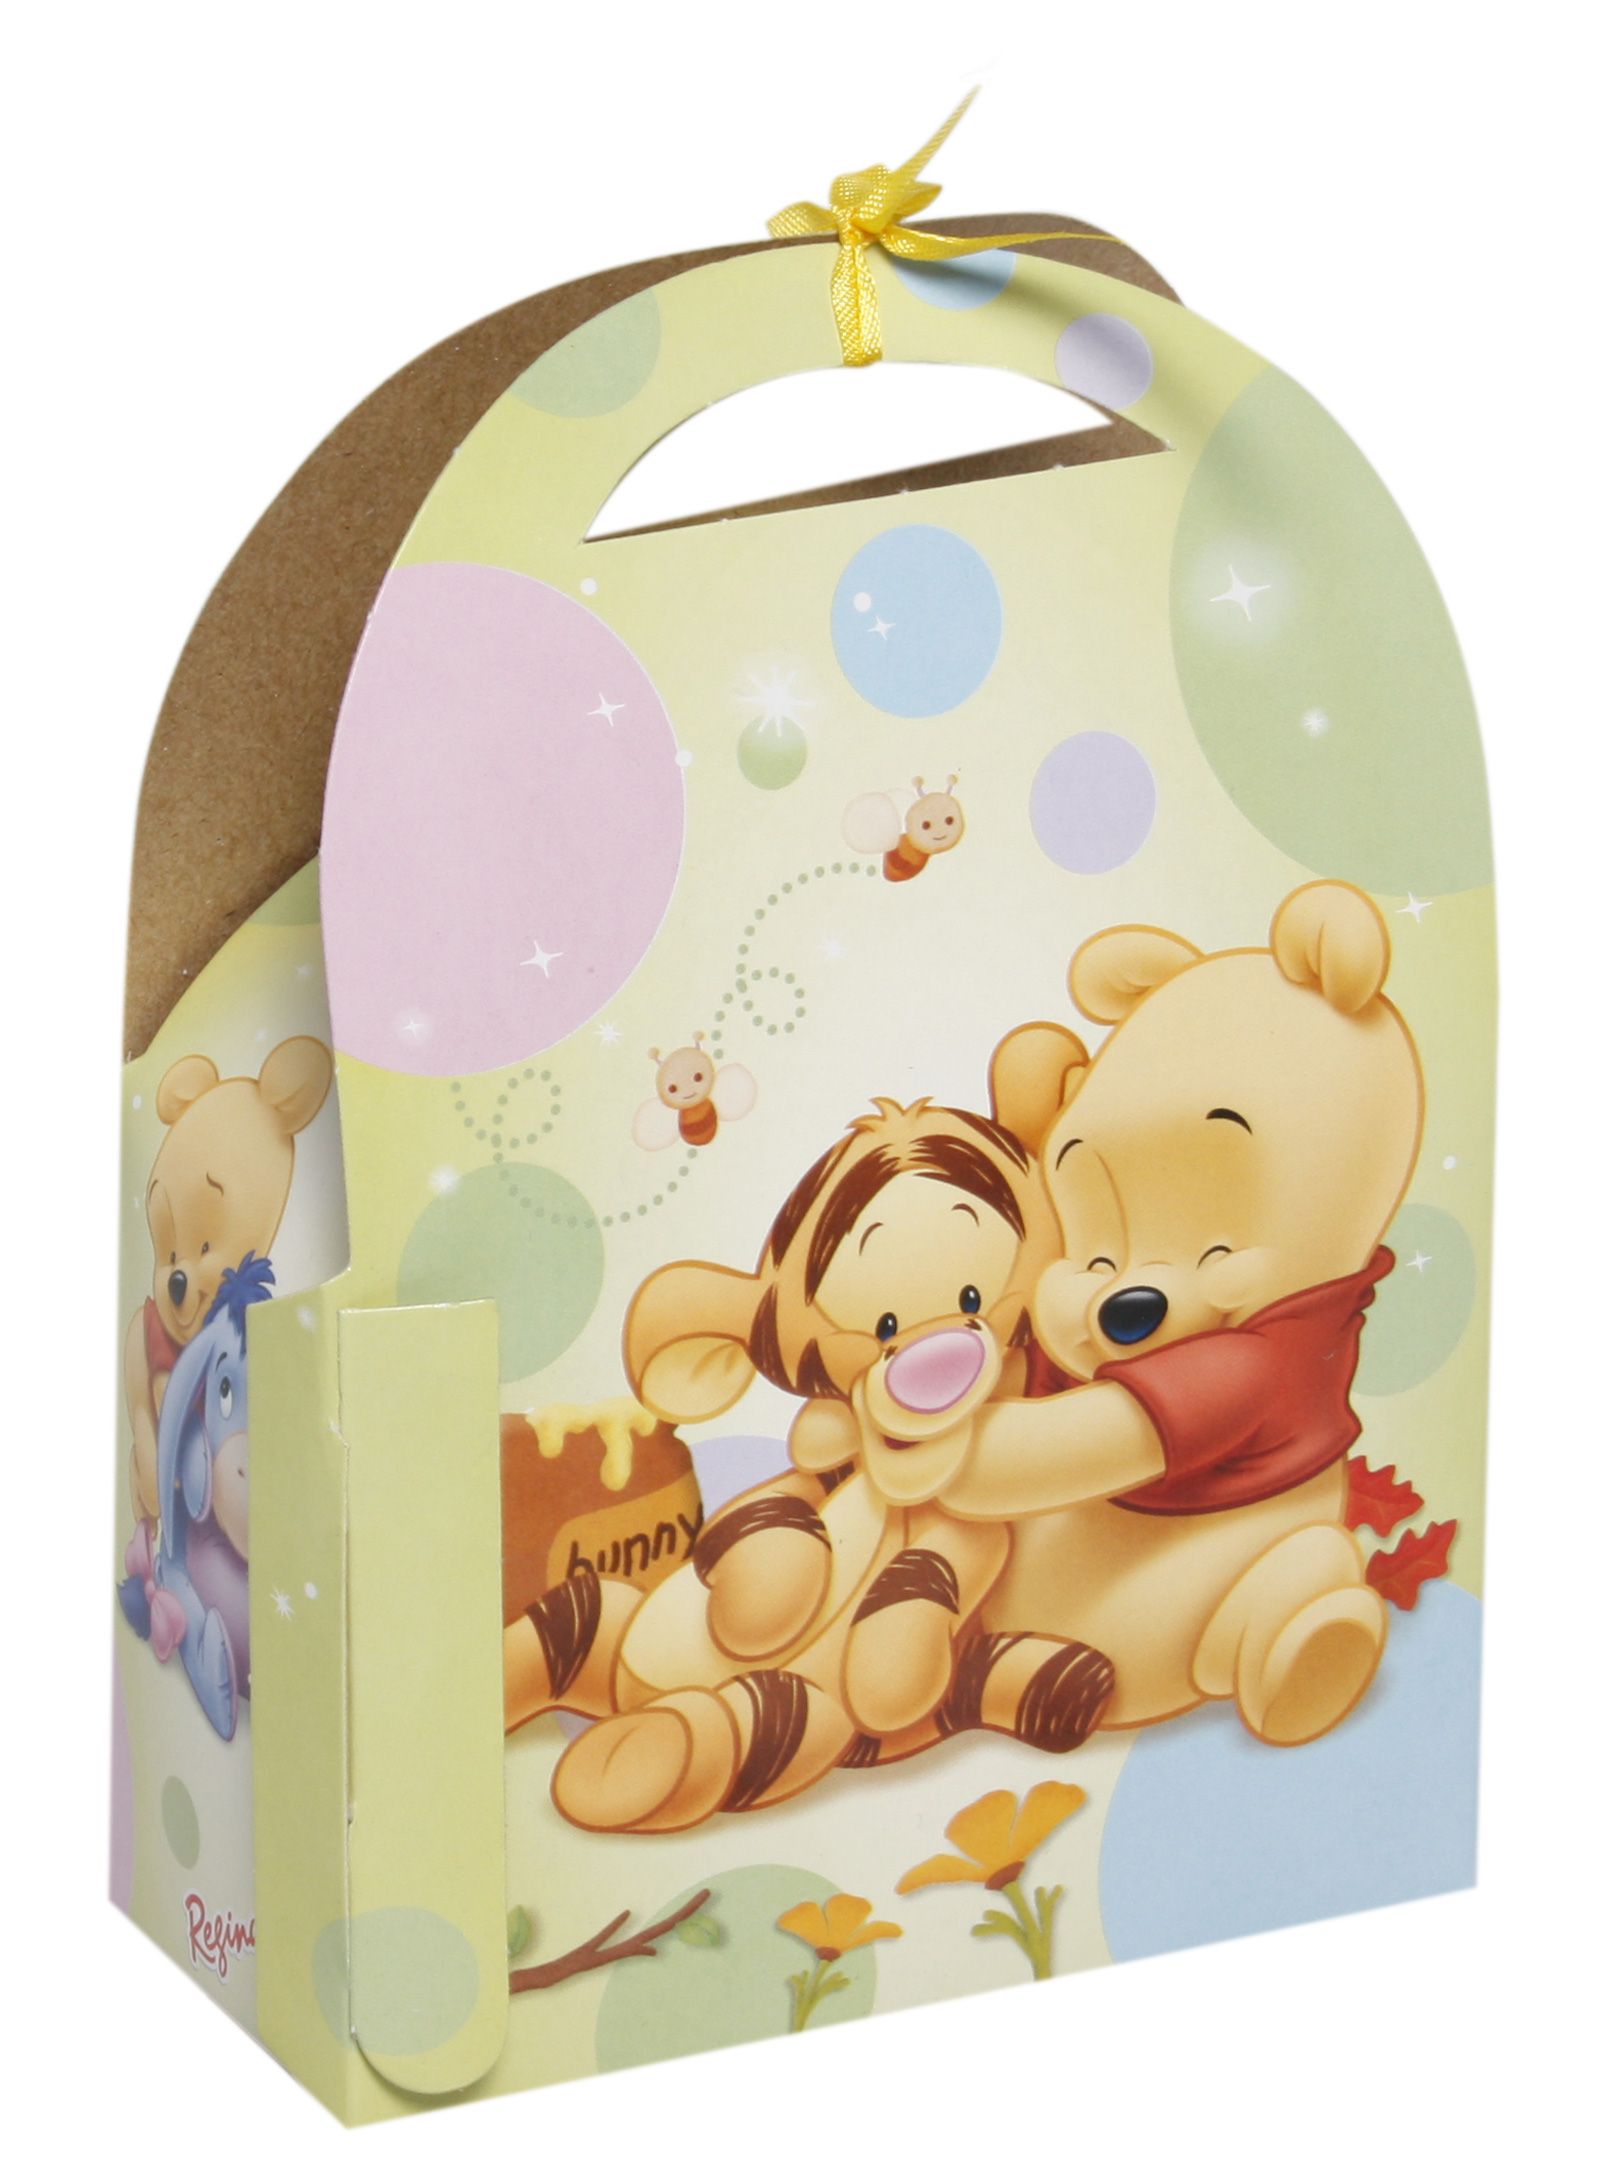 Disney Pooh and Friends - Treat Box